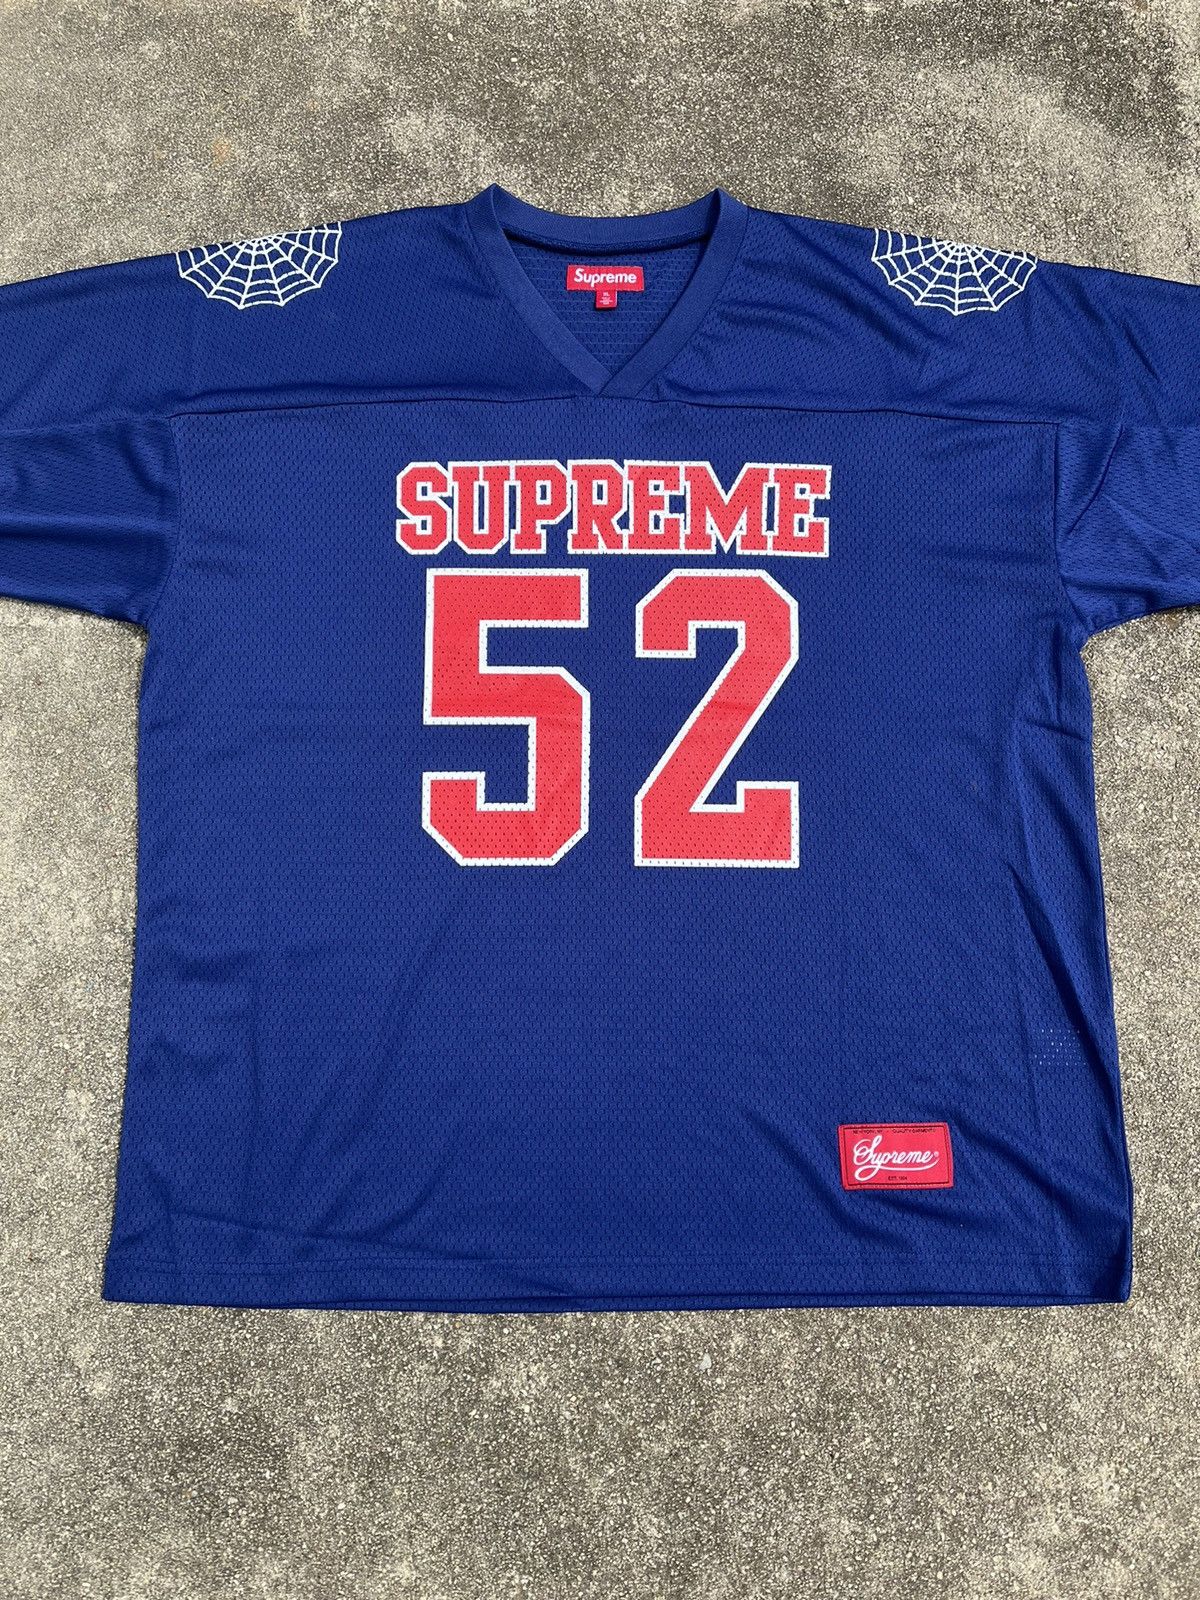 XL Supreme Spiderweb Football Jersey - シャツ